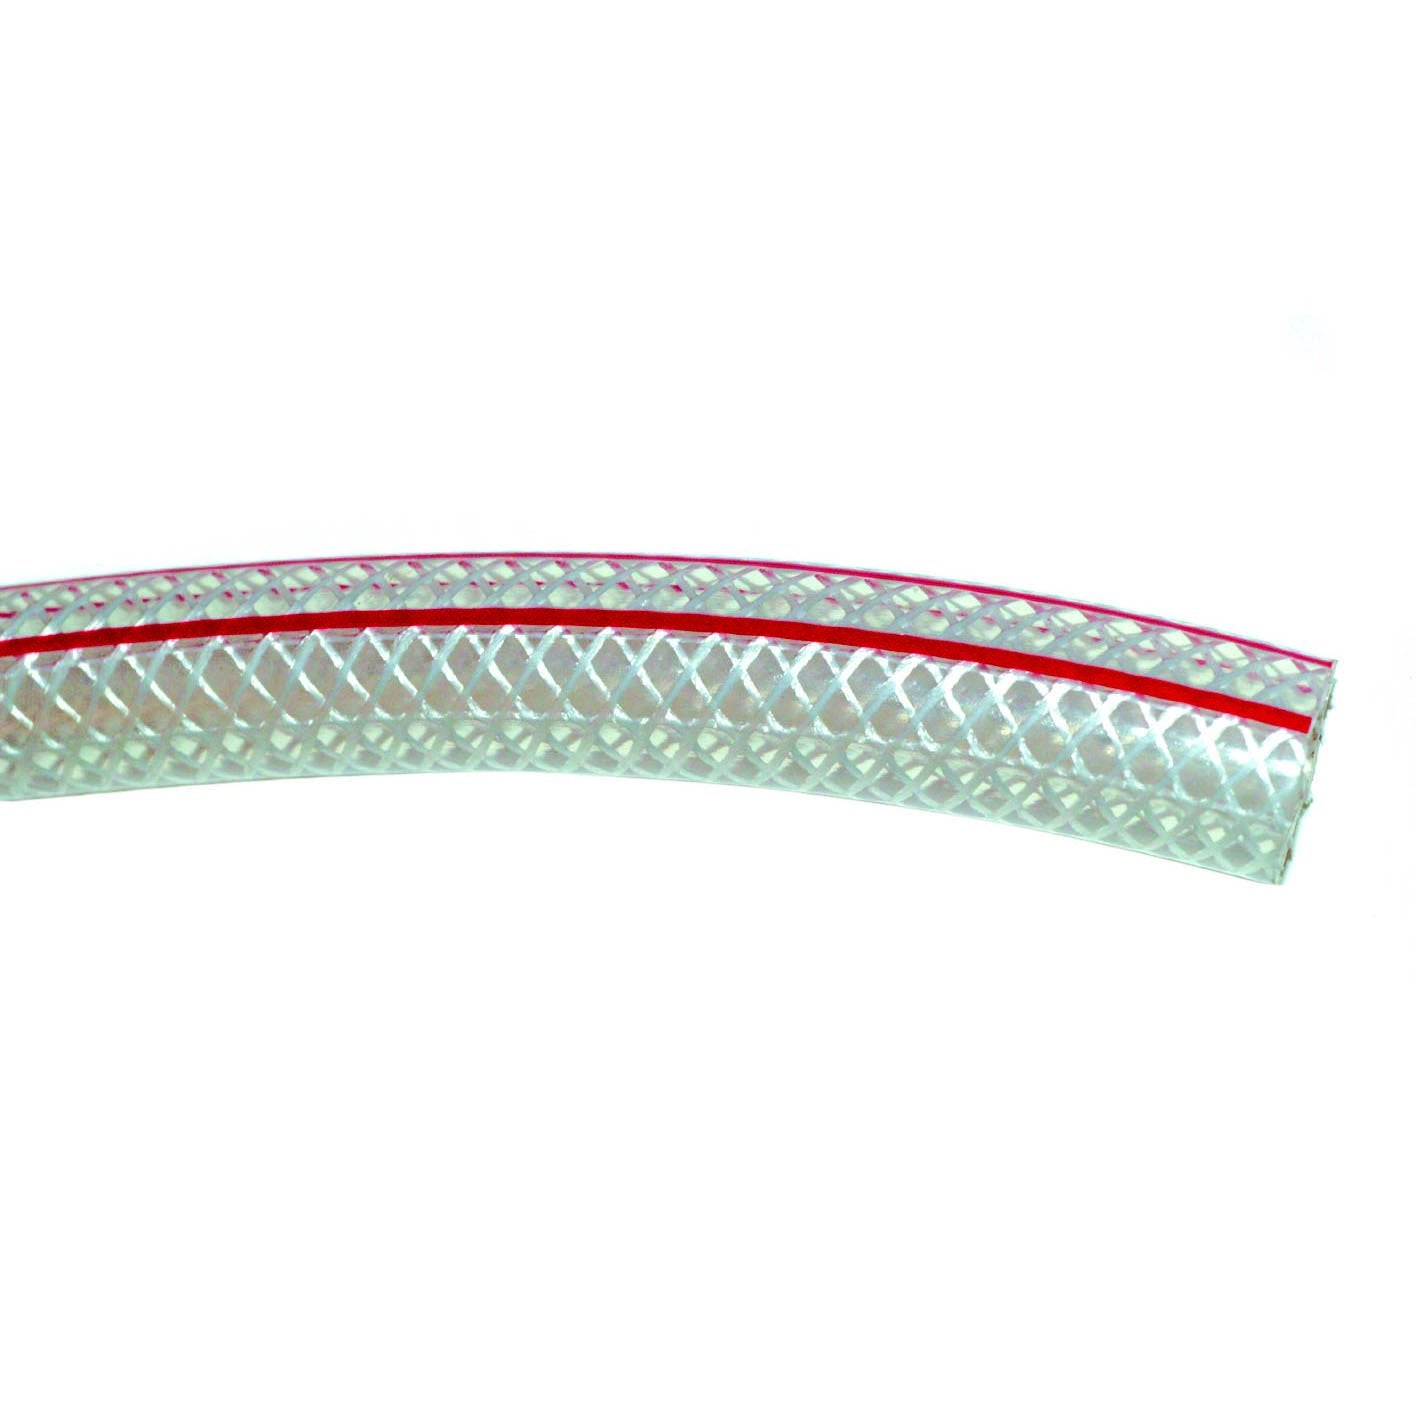 Crystal clear yarn reinforced non-toxic braided PVC hose